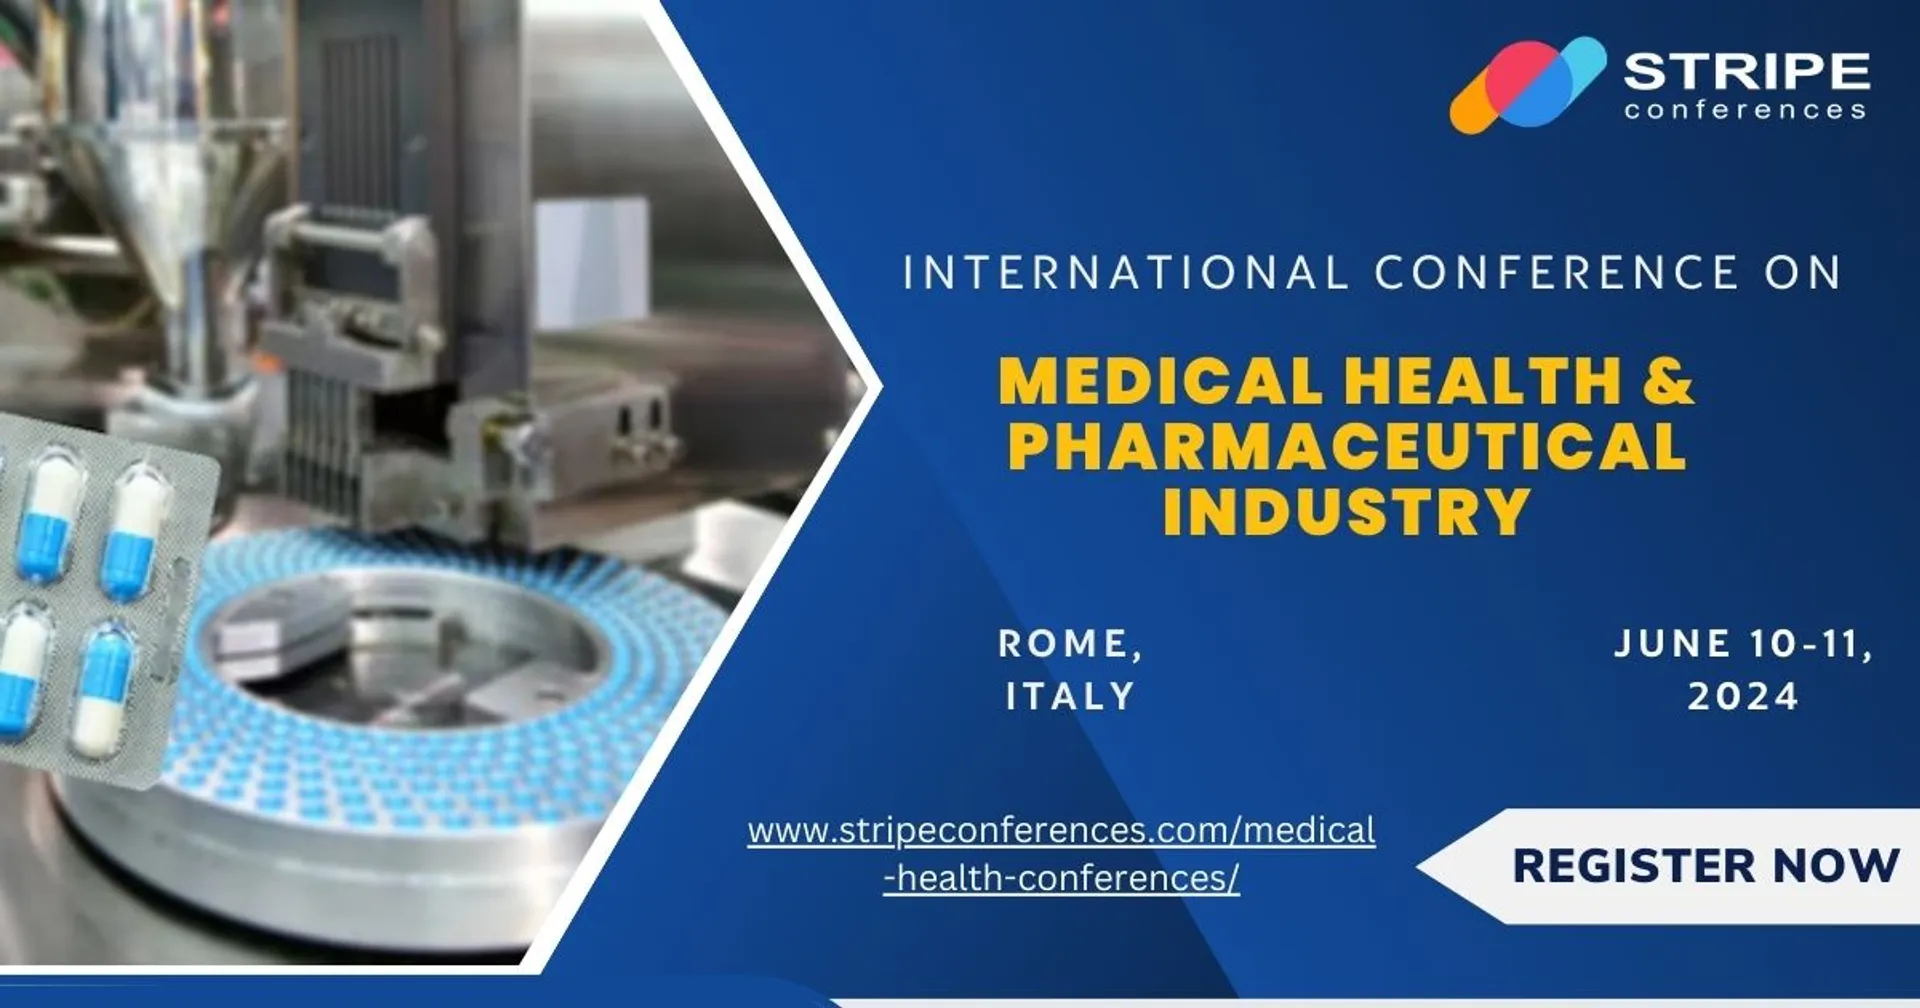 Medical Health & Pharmaceutical Industry-7lm6ip.jpg